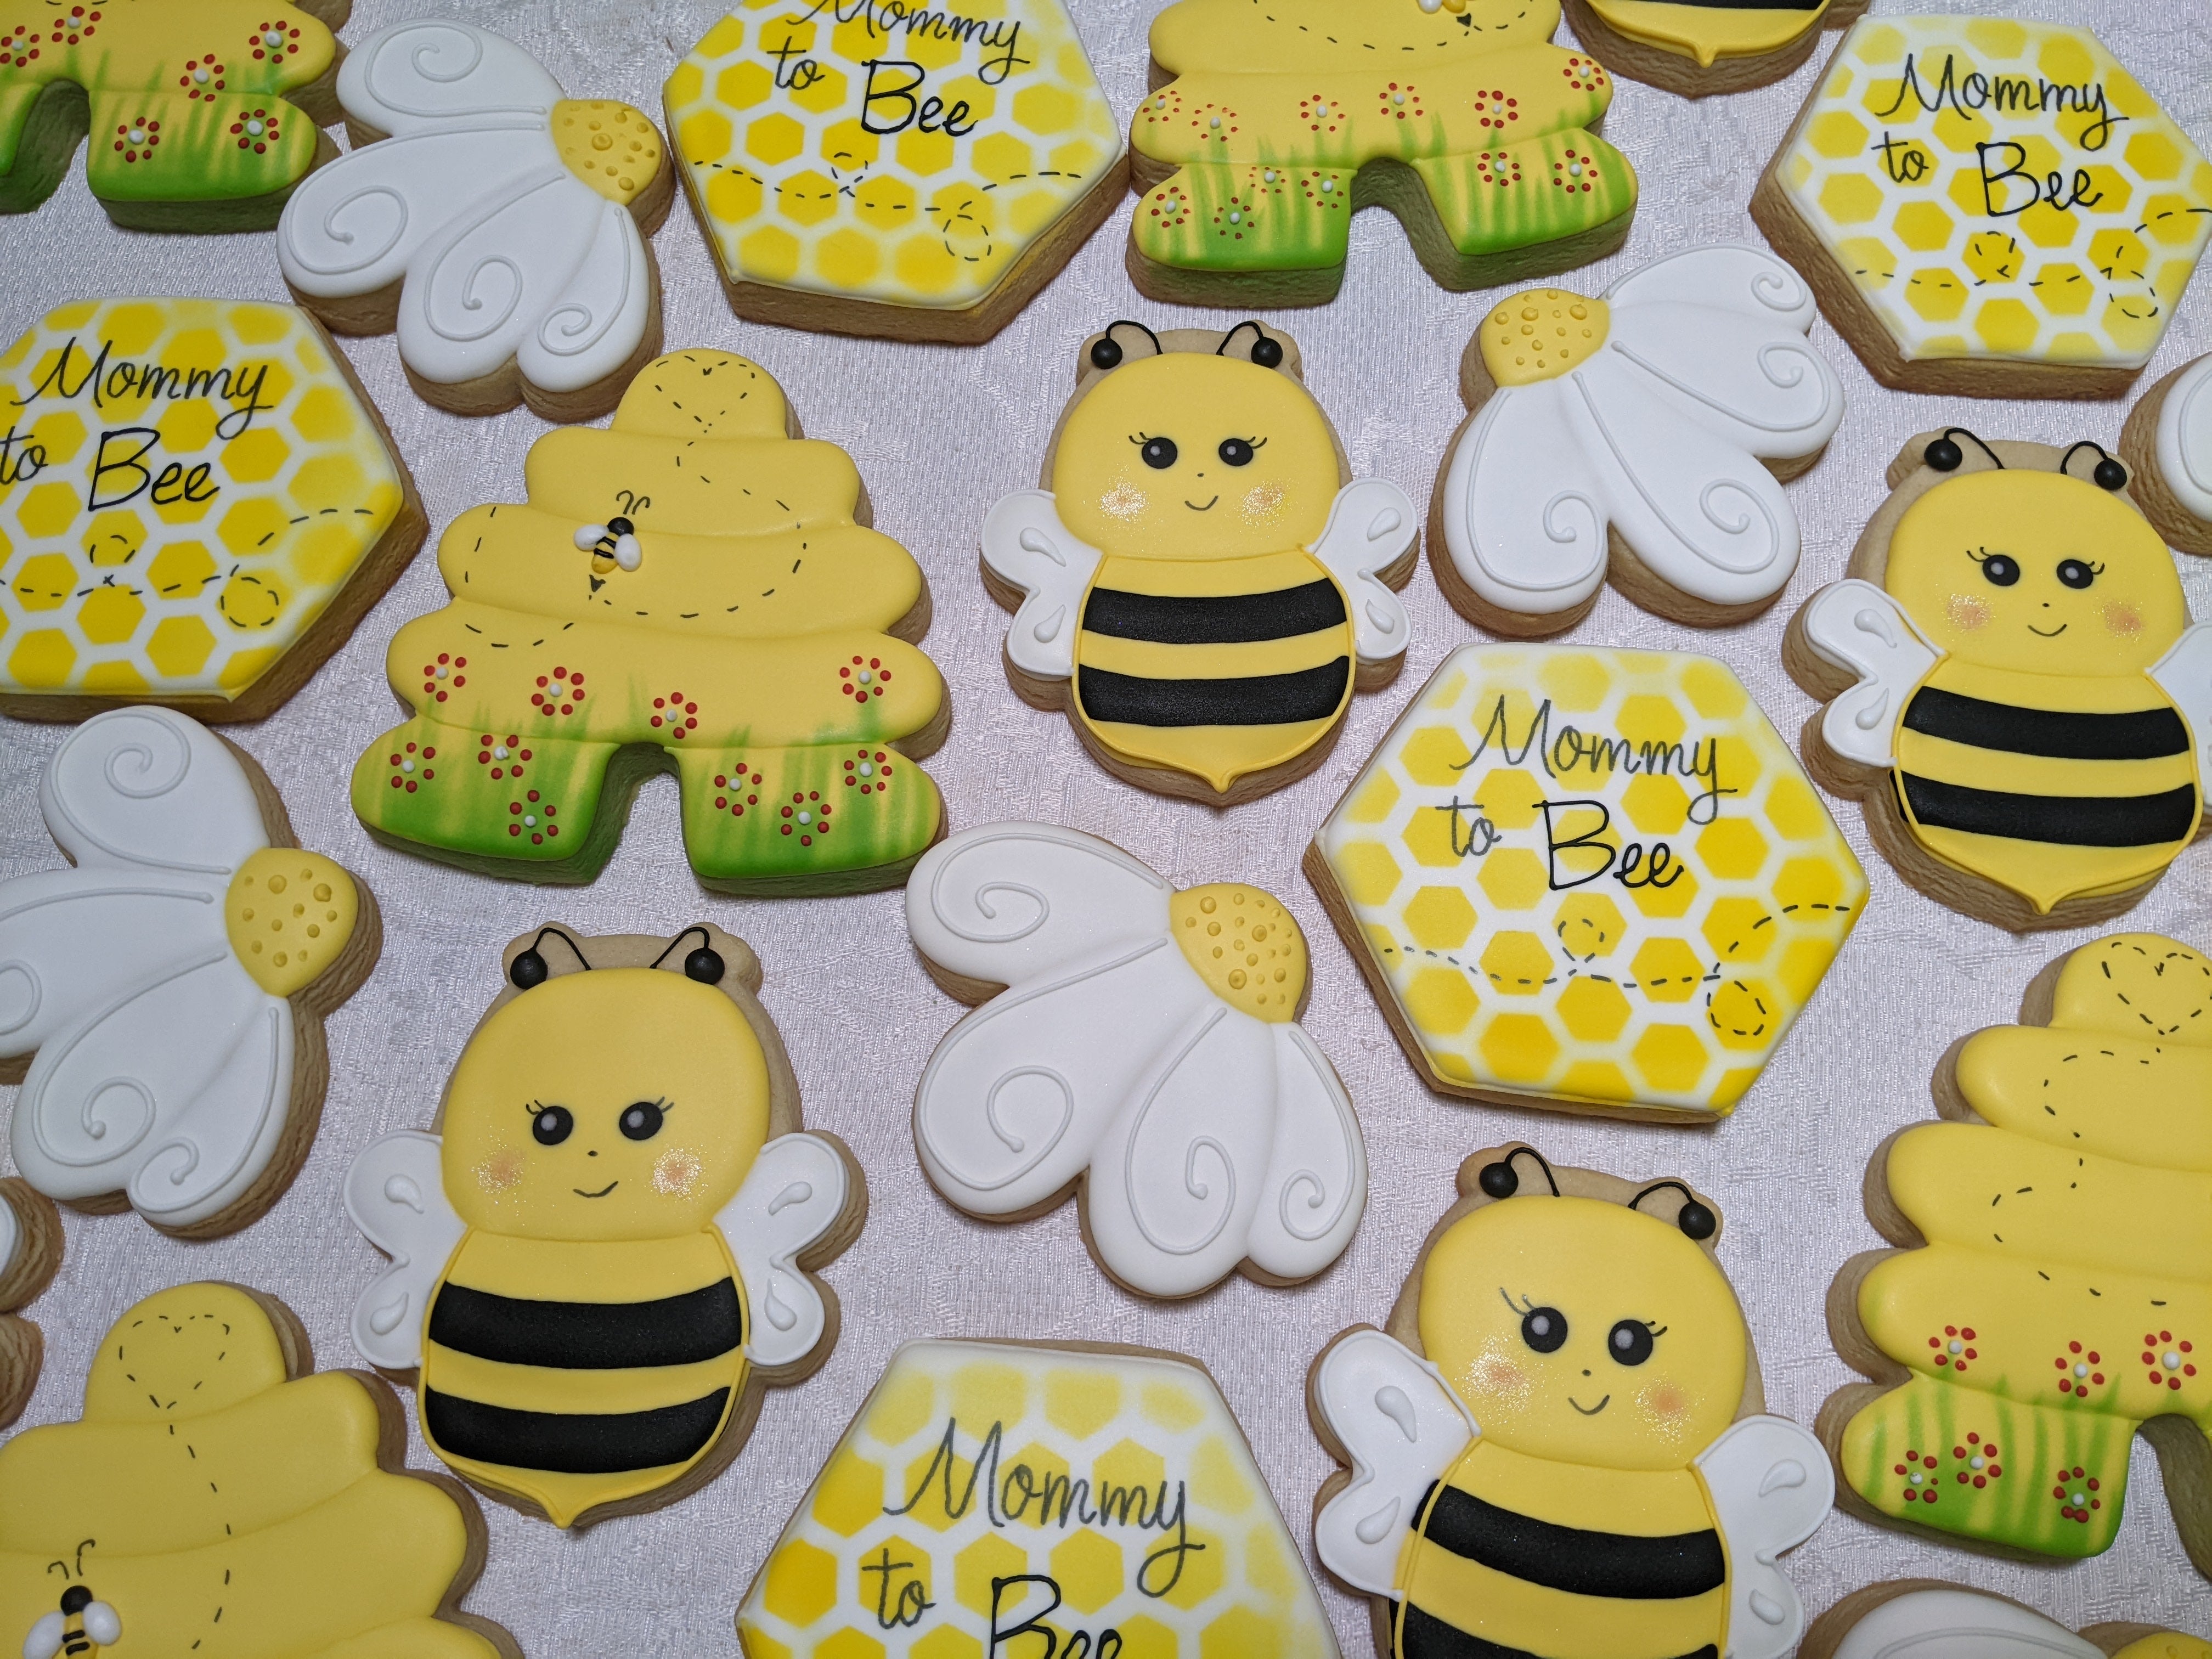 Bumble Bee Decorative Sugars - 12ct, Asstd. — SprinkleDeco